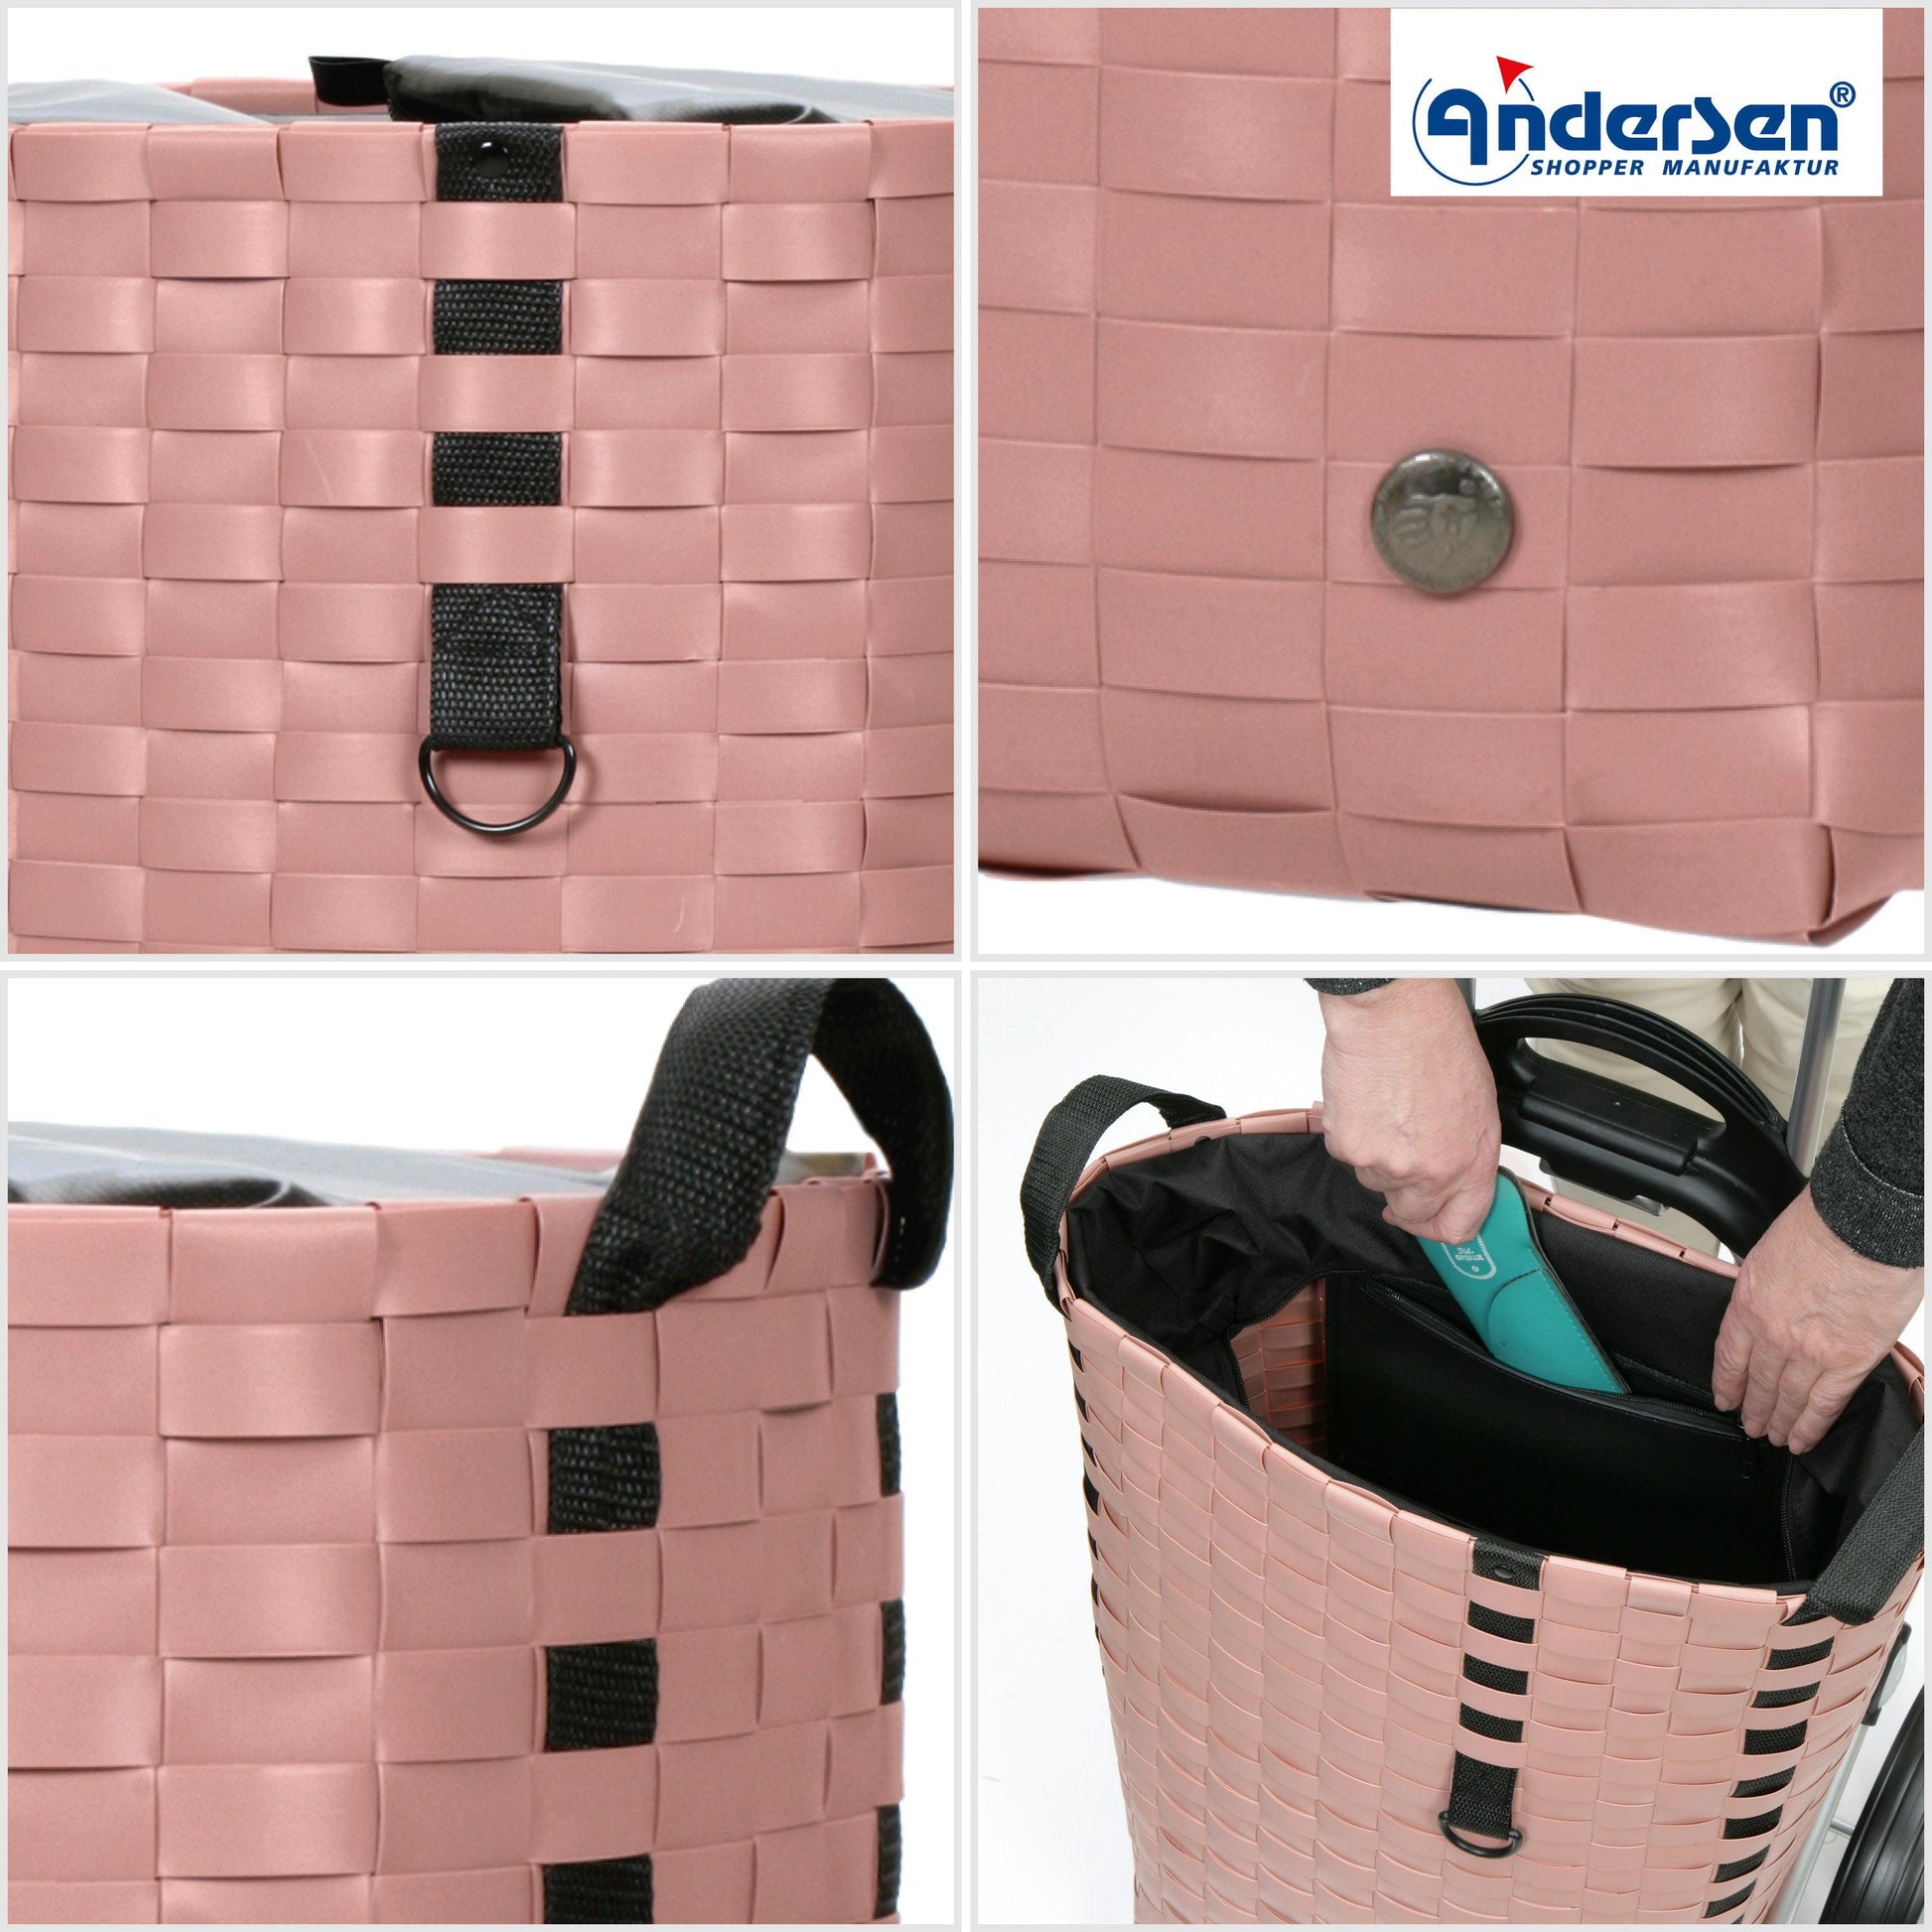 Andersen Shopper Manufaktur-Royal Shopper (Metallspeichenrad 25 cm) Silja terra pink-www.shopping-trolley.ch-bild5